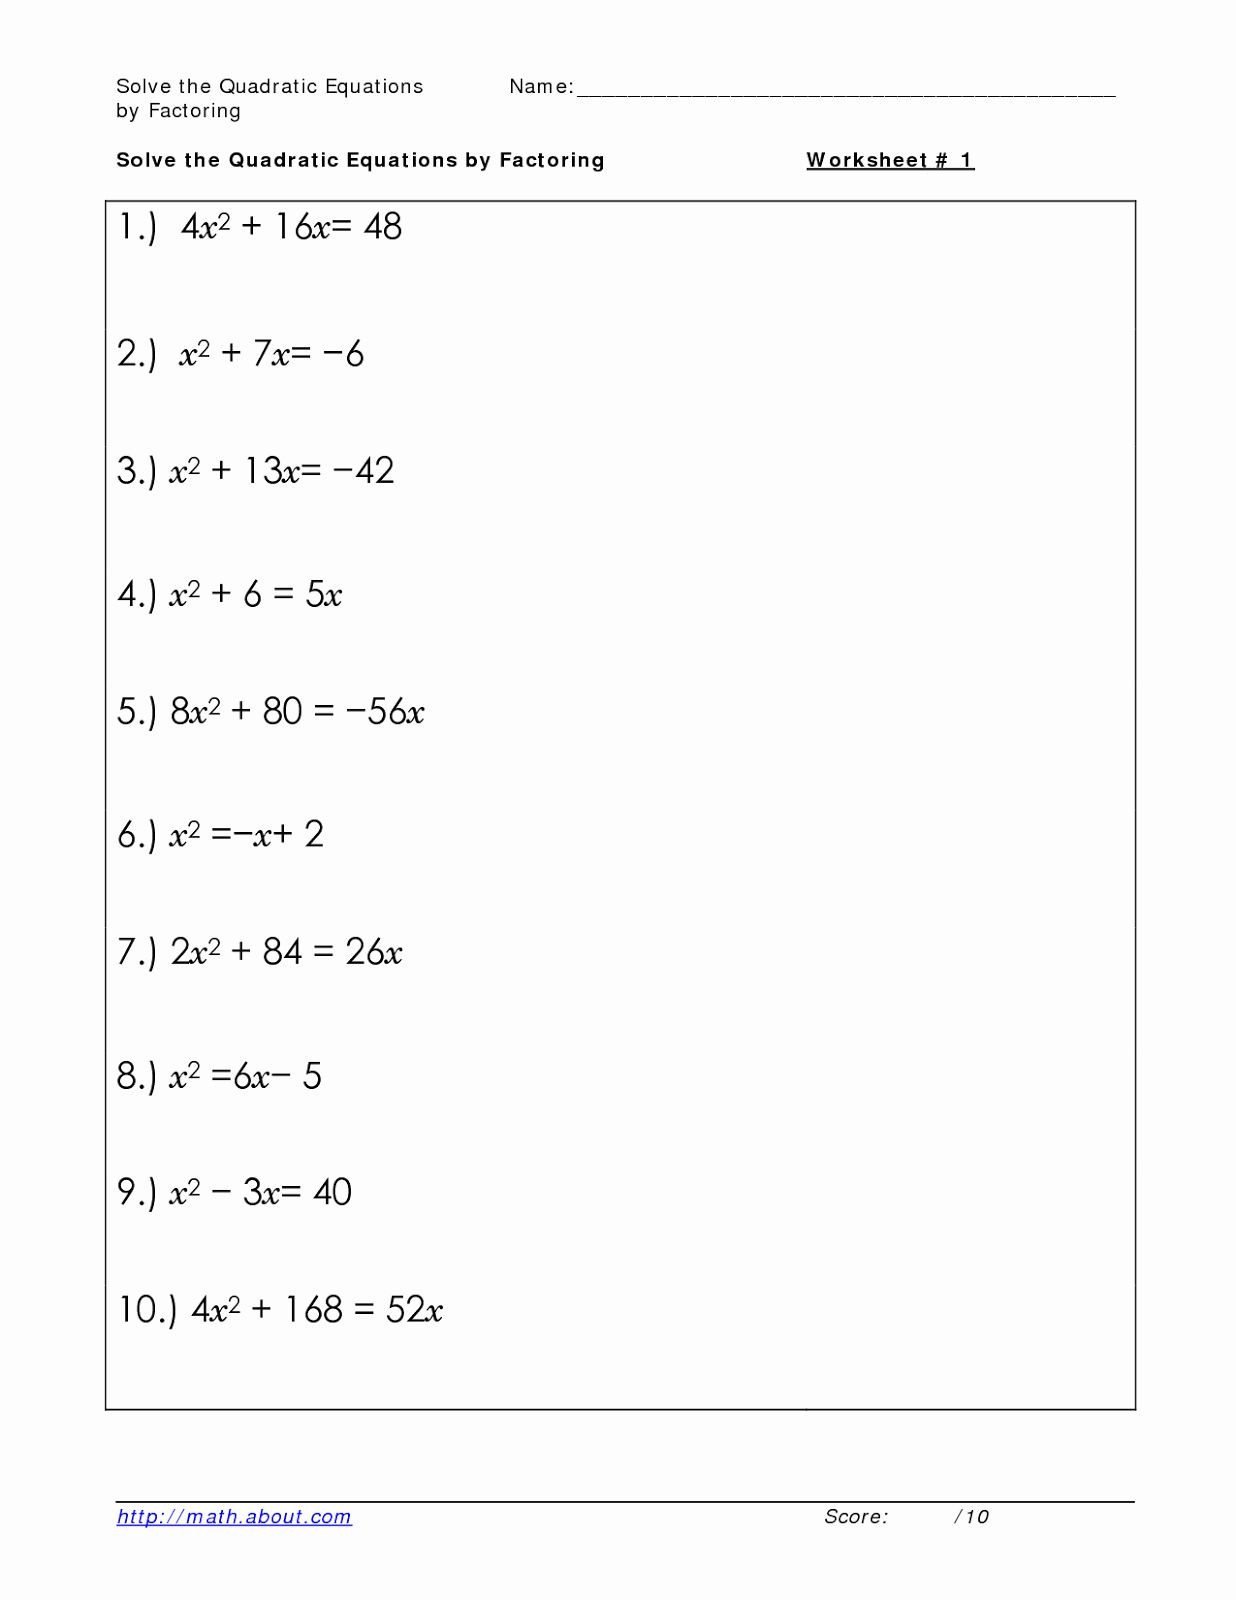 Factoring Quadratic Equations Worksheet 50 solve by Factoring Worksheet In 2020